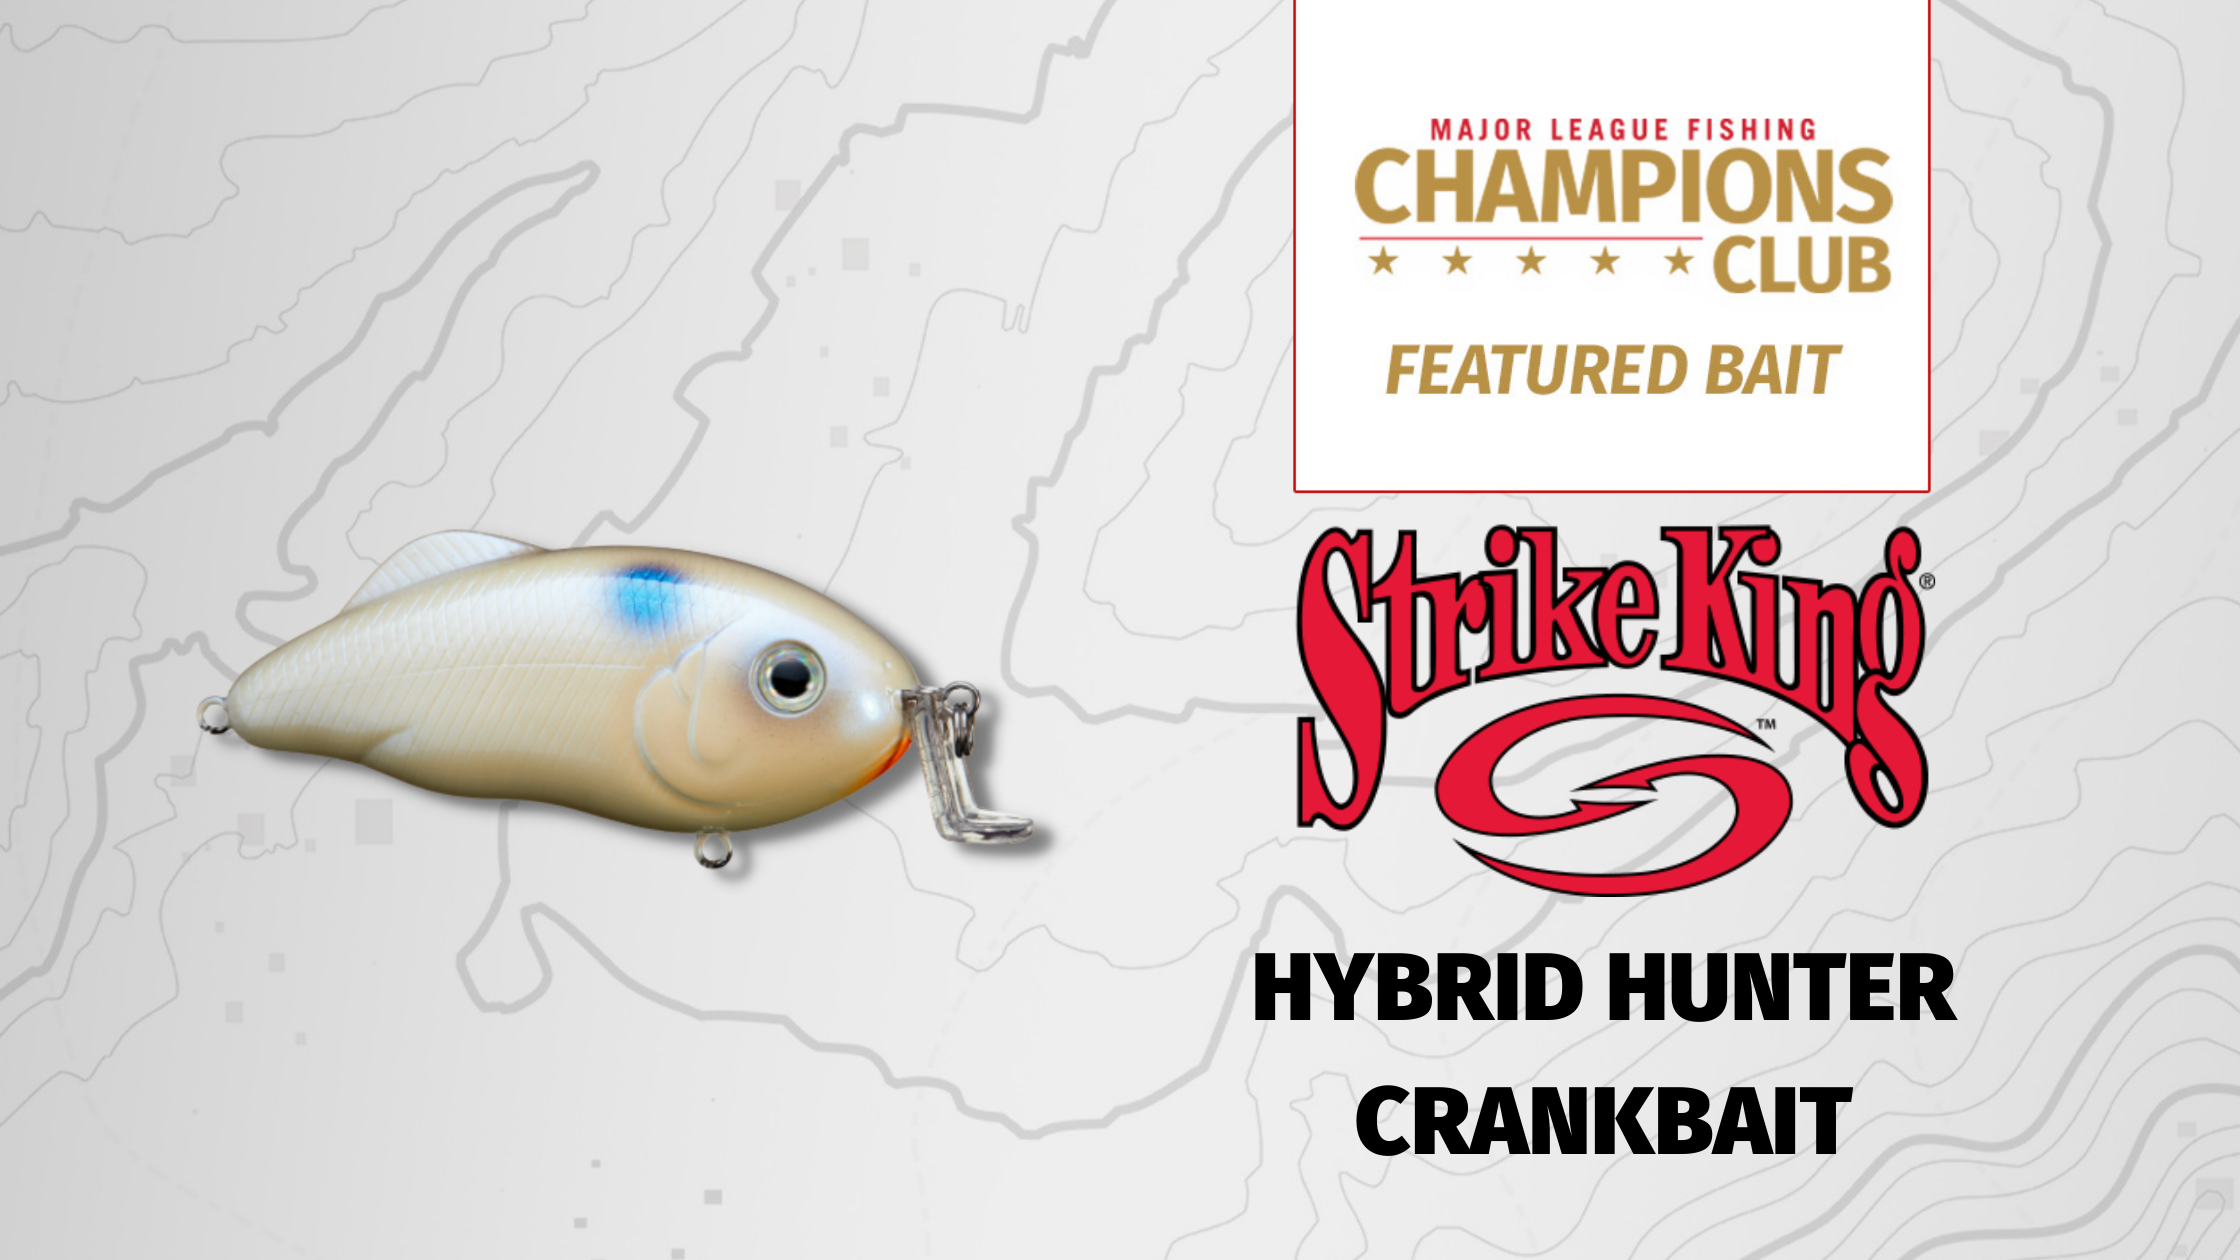 Featured Bait: Strike King Hybrid Hunter - Major League Fishing